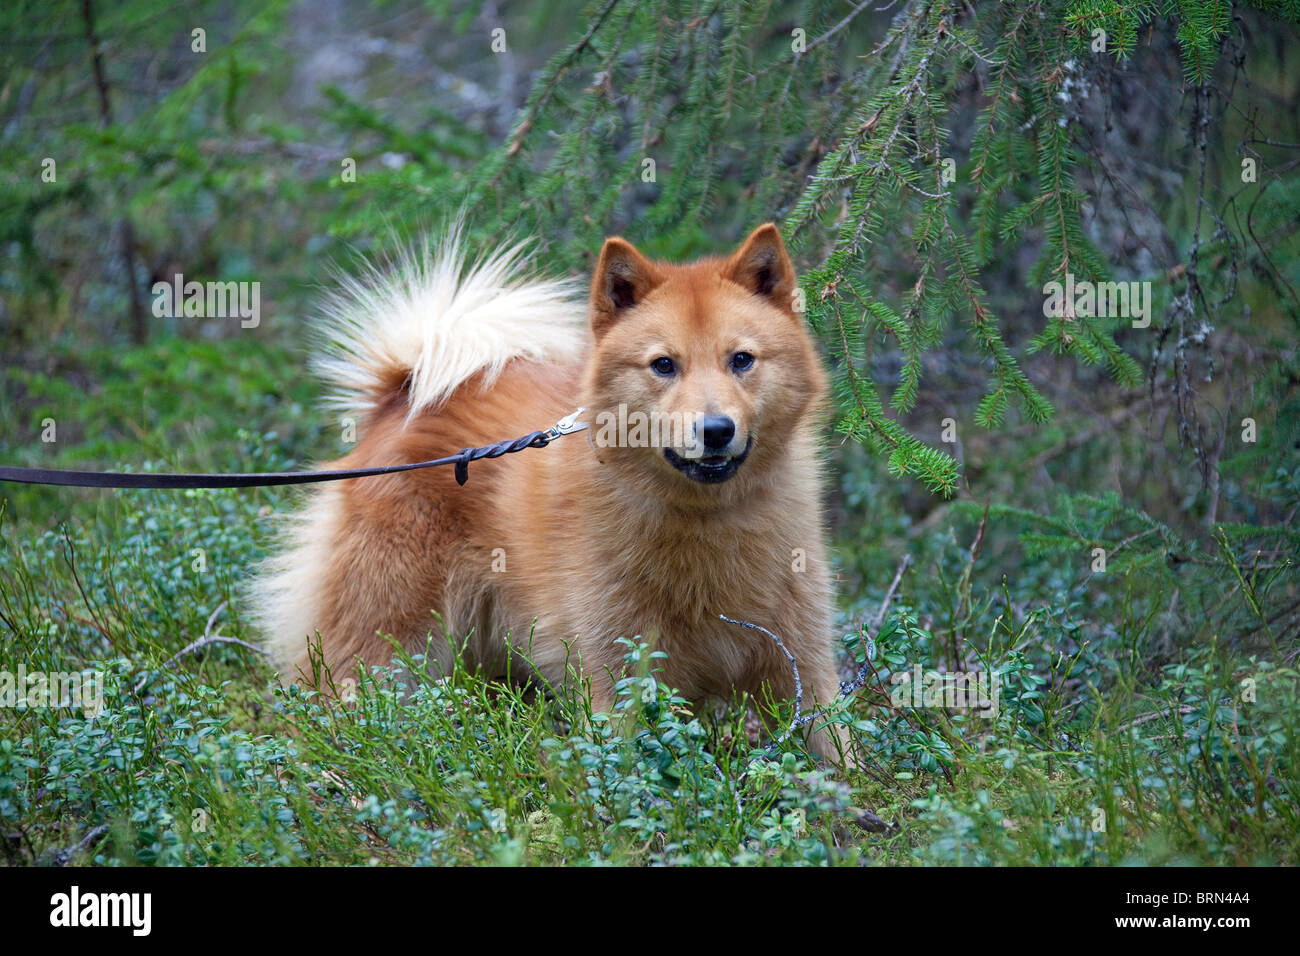 Spitz nórdicos, Spitz finlandés (Canis lupus familiaris), utilizado en la caza de aves. Foto de stock